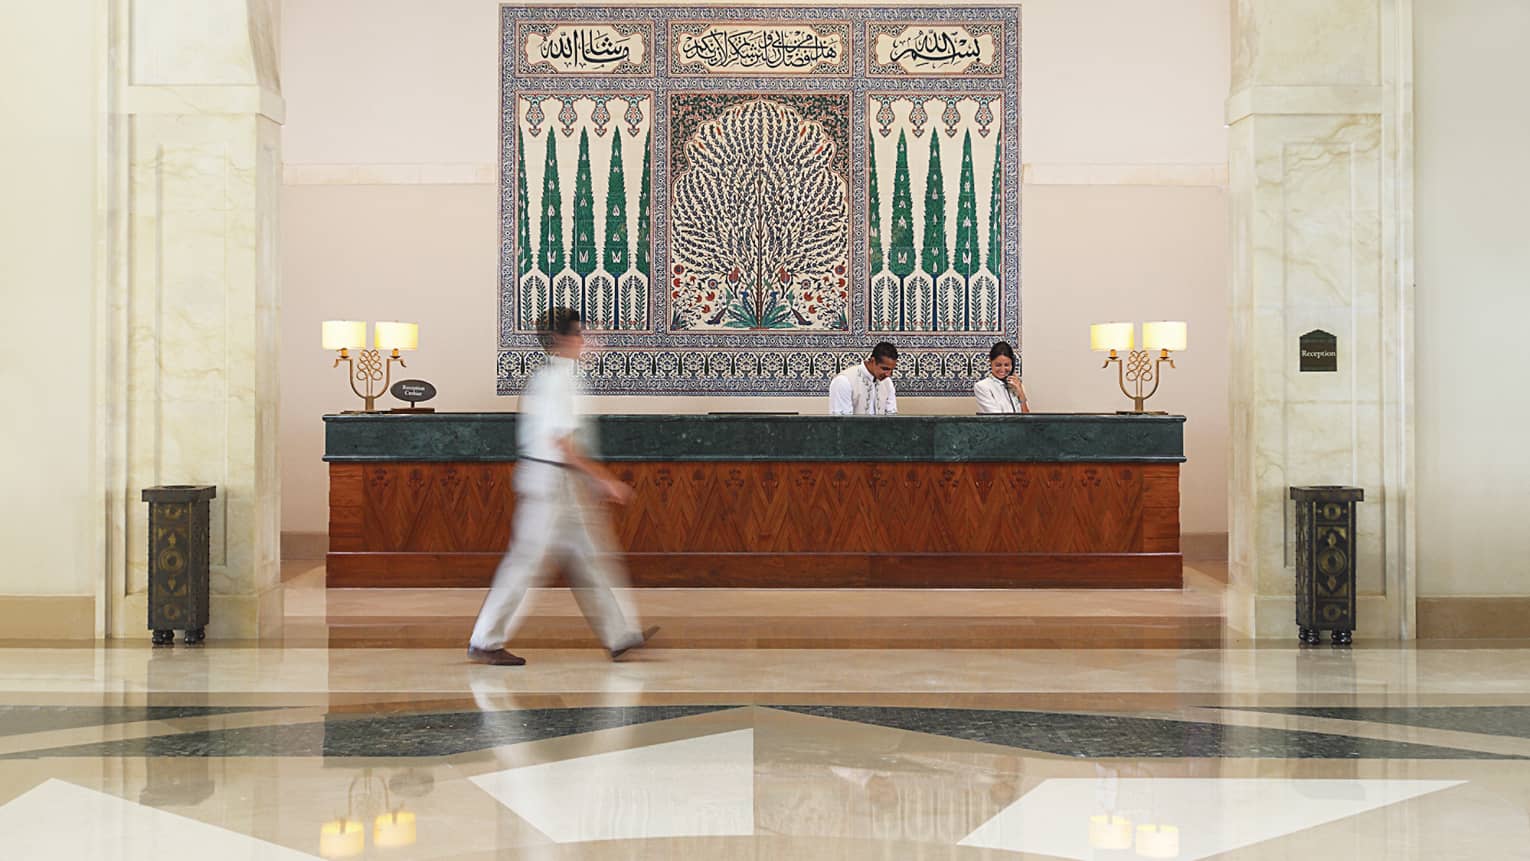 Man walks through hotel lobby, past staff at reception desk under large tile mosaic